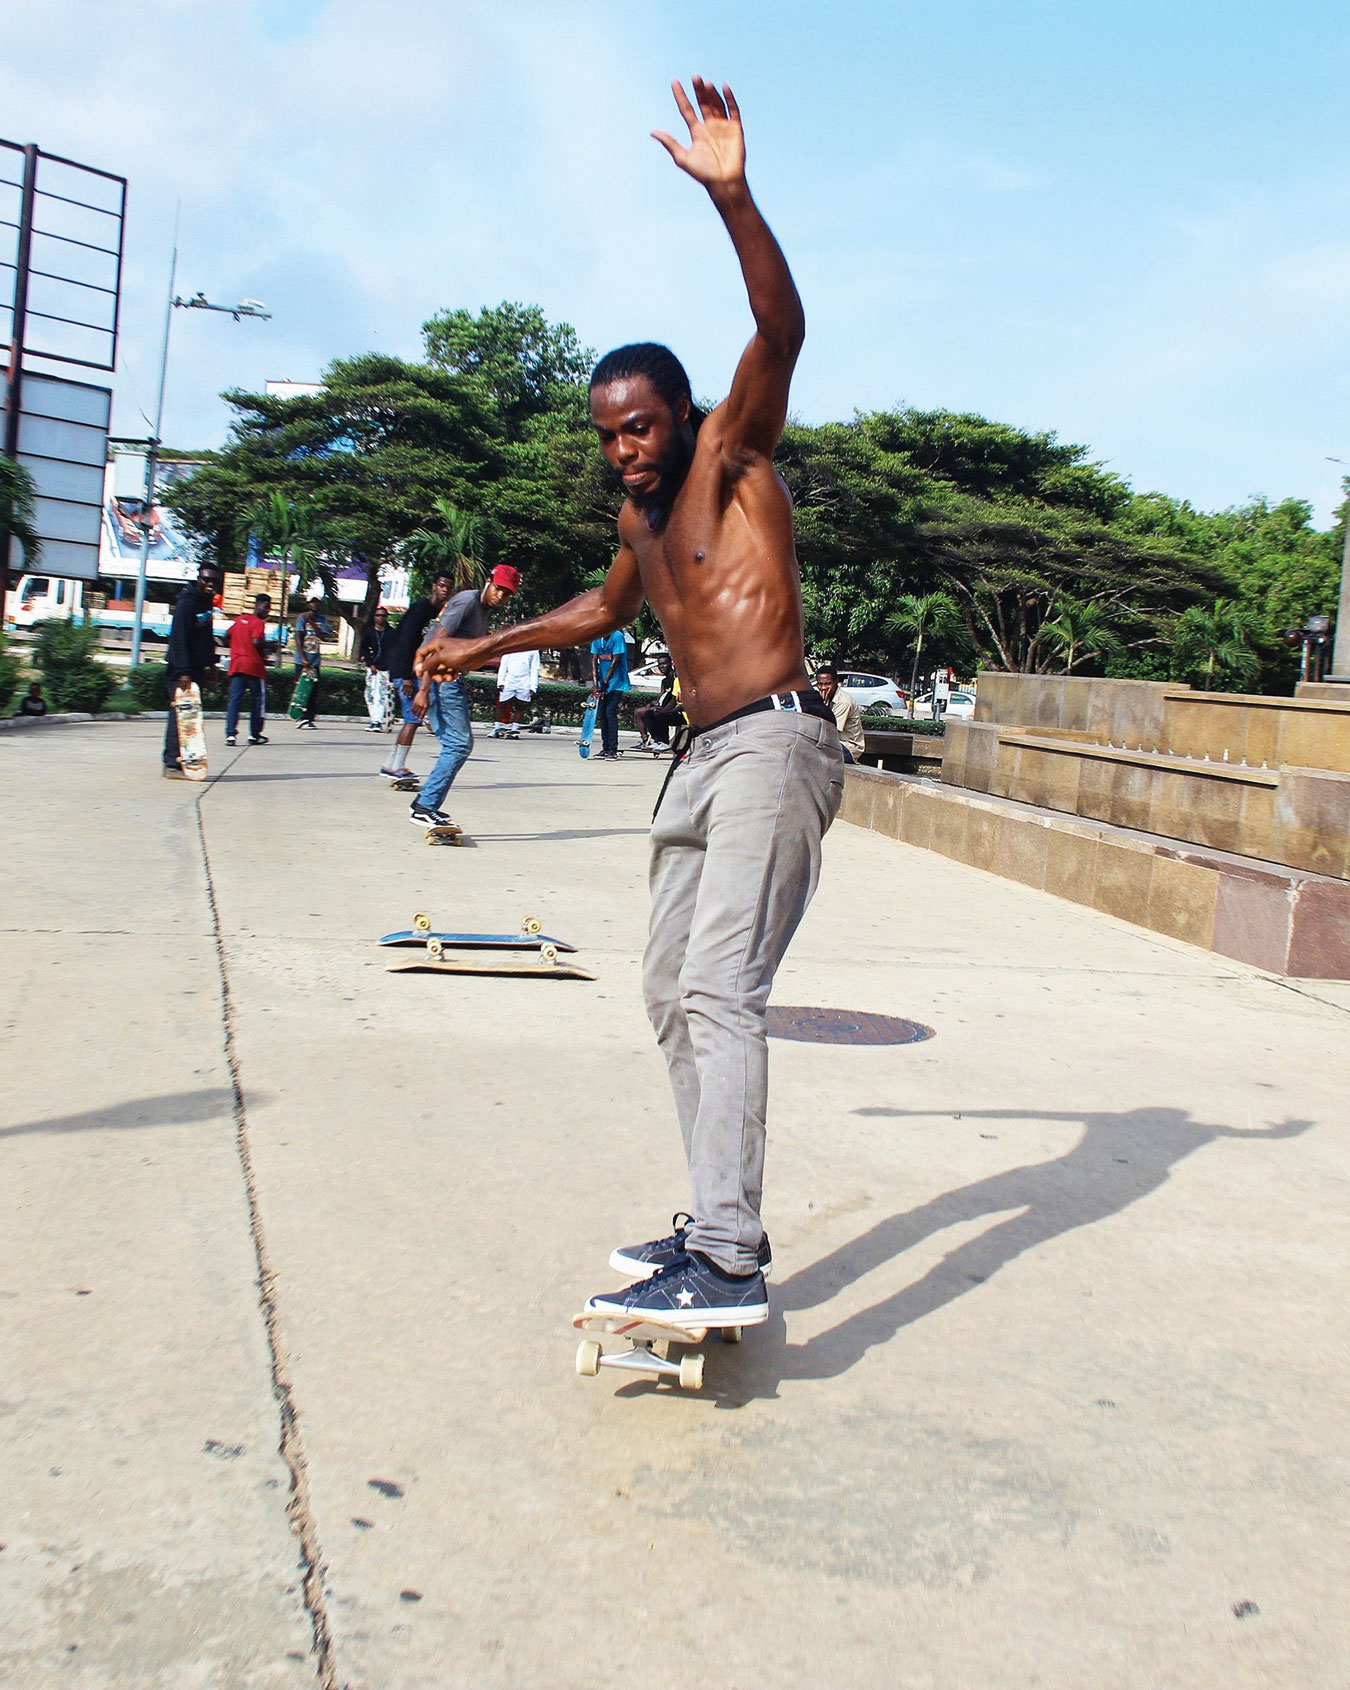 Joshua, Gründer von „Skate Nation Ghana”, skatet für die Foto-Kampagne vom Freedom Skate Park